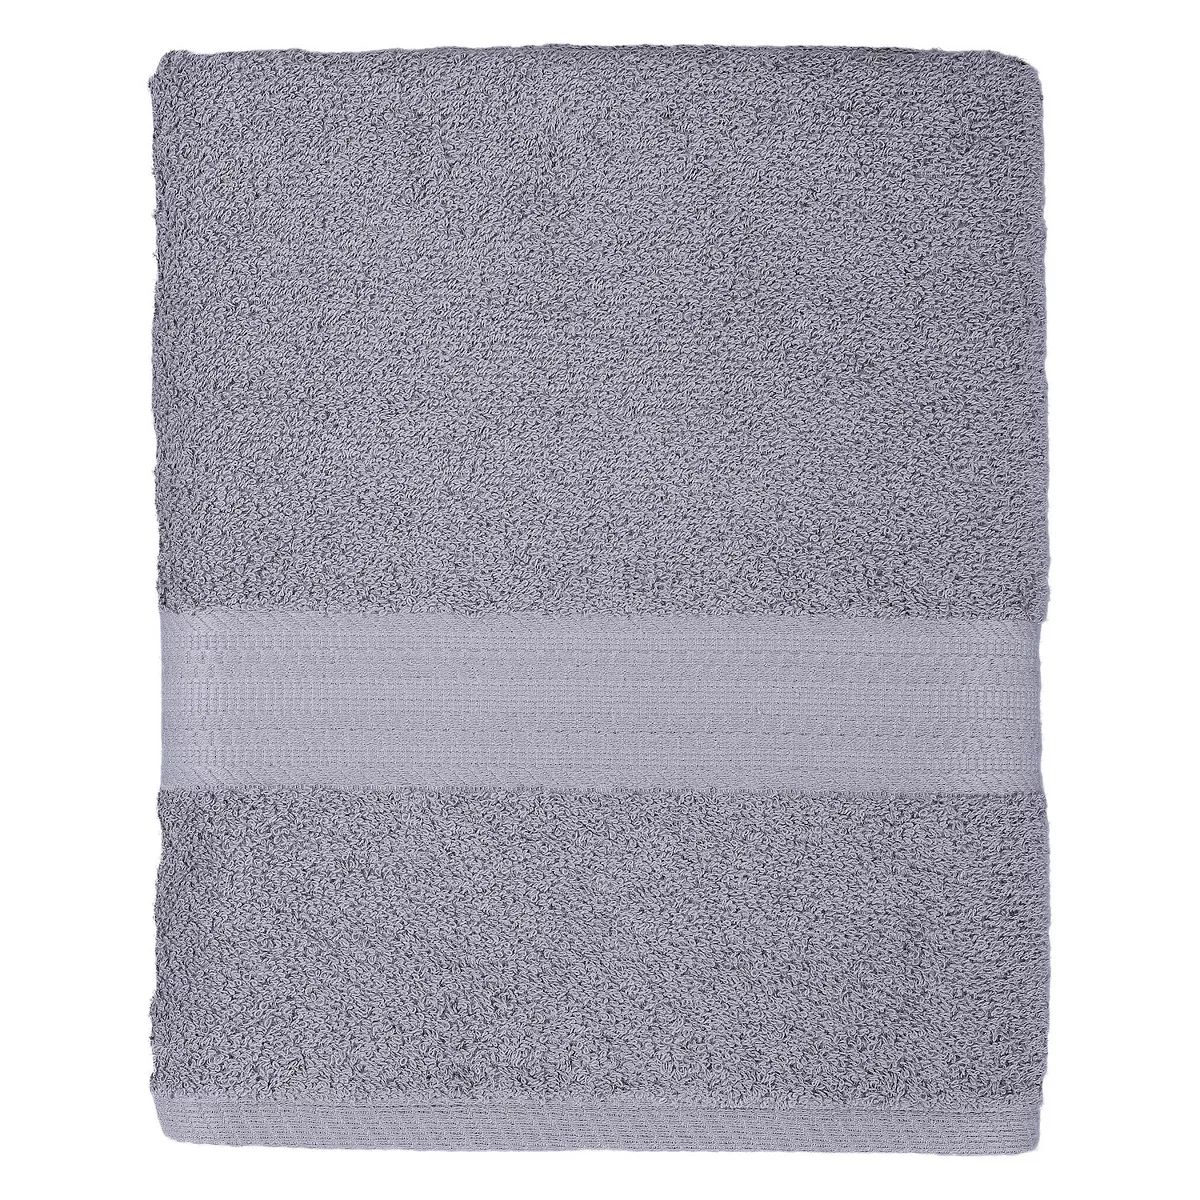 The Big One® Solid Bath Towel, Bath Sheet, Hand Towel or Washcloth | Kohl's